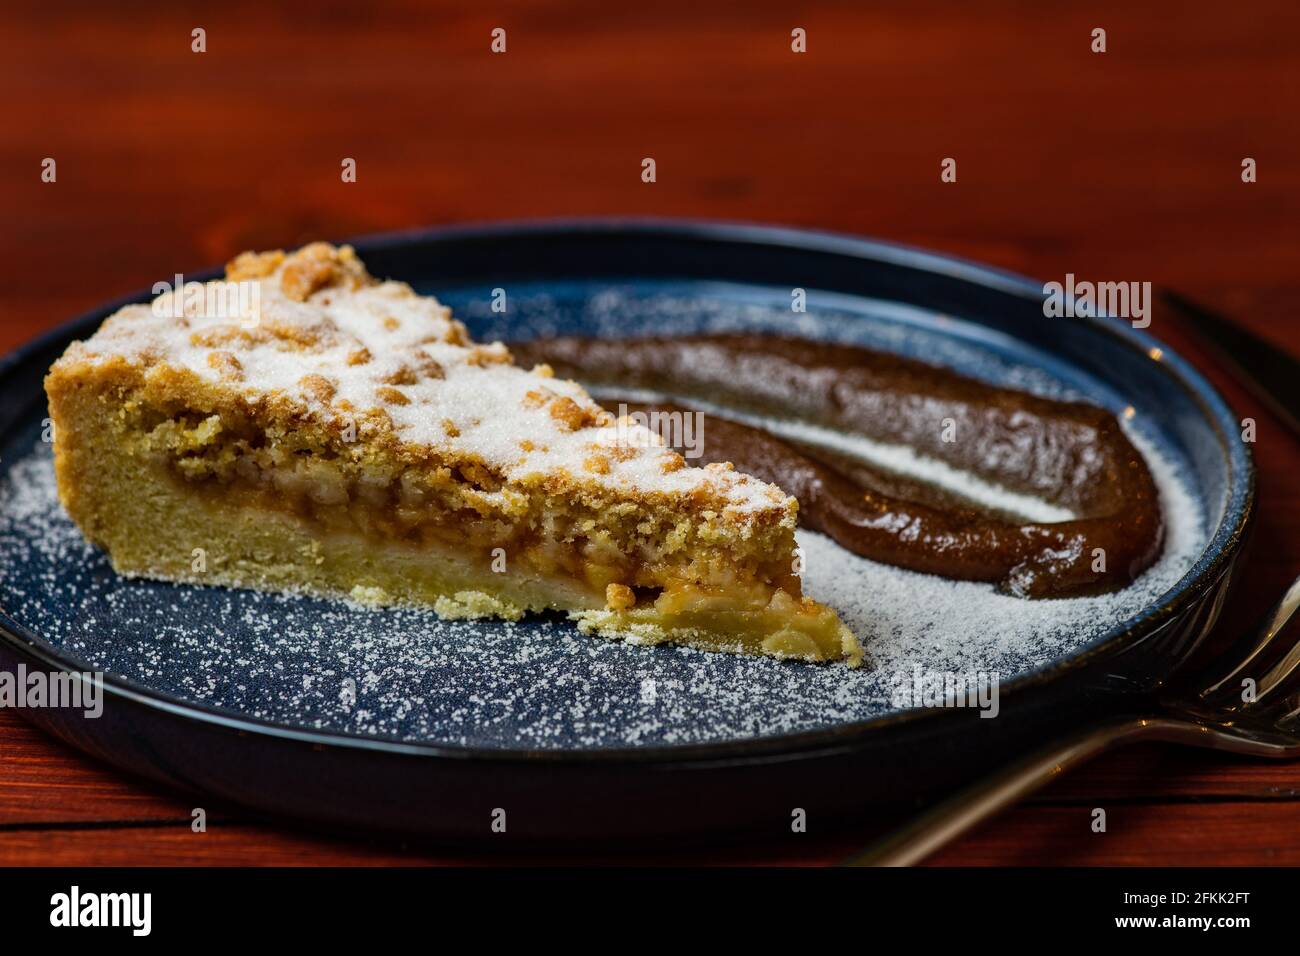 Fresh baked apple pie on wooden table Stock Photo